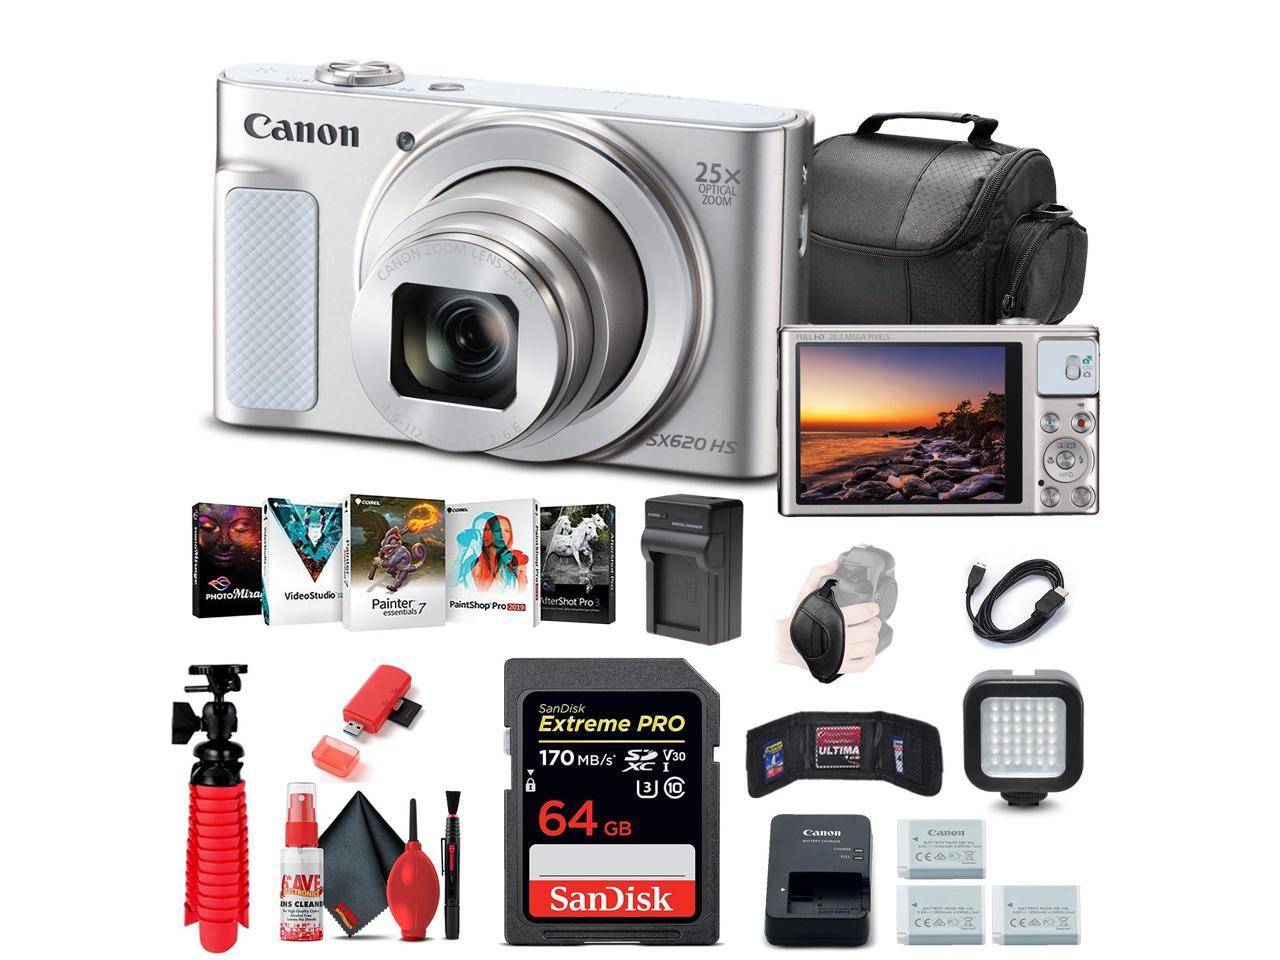 Canon PowerShot SX620 HS Digital Camera (Silver) (1074C001) +